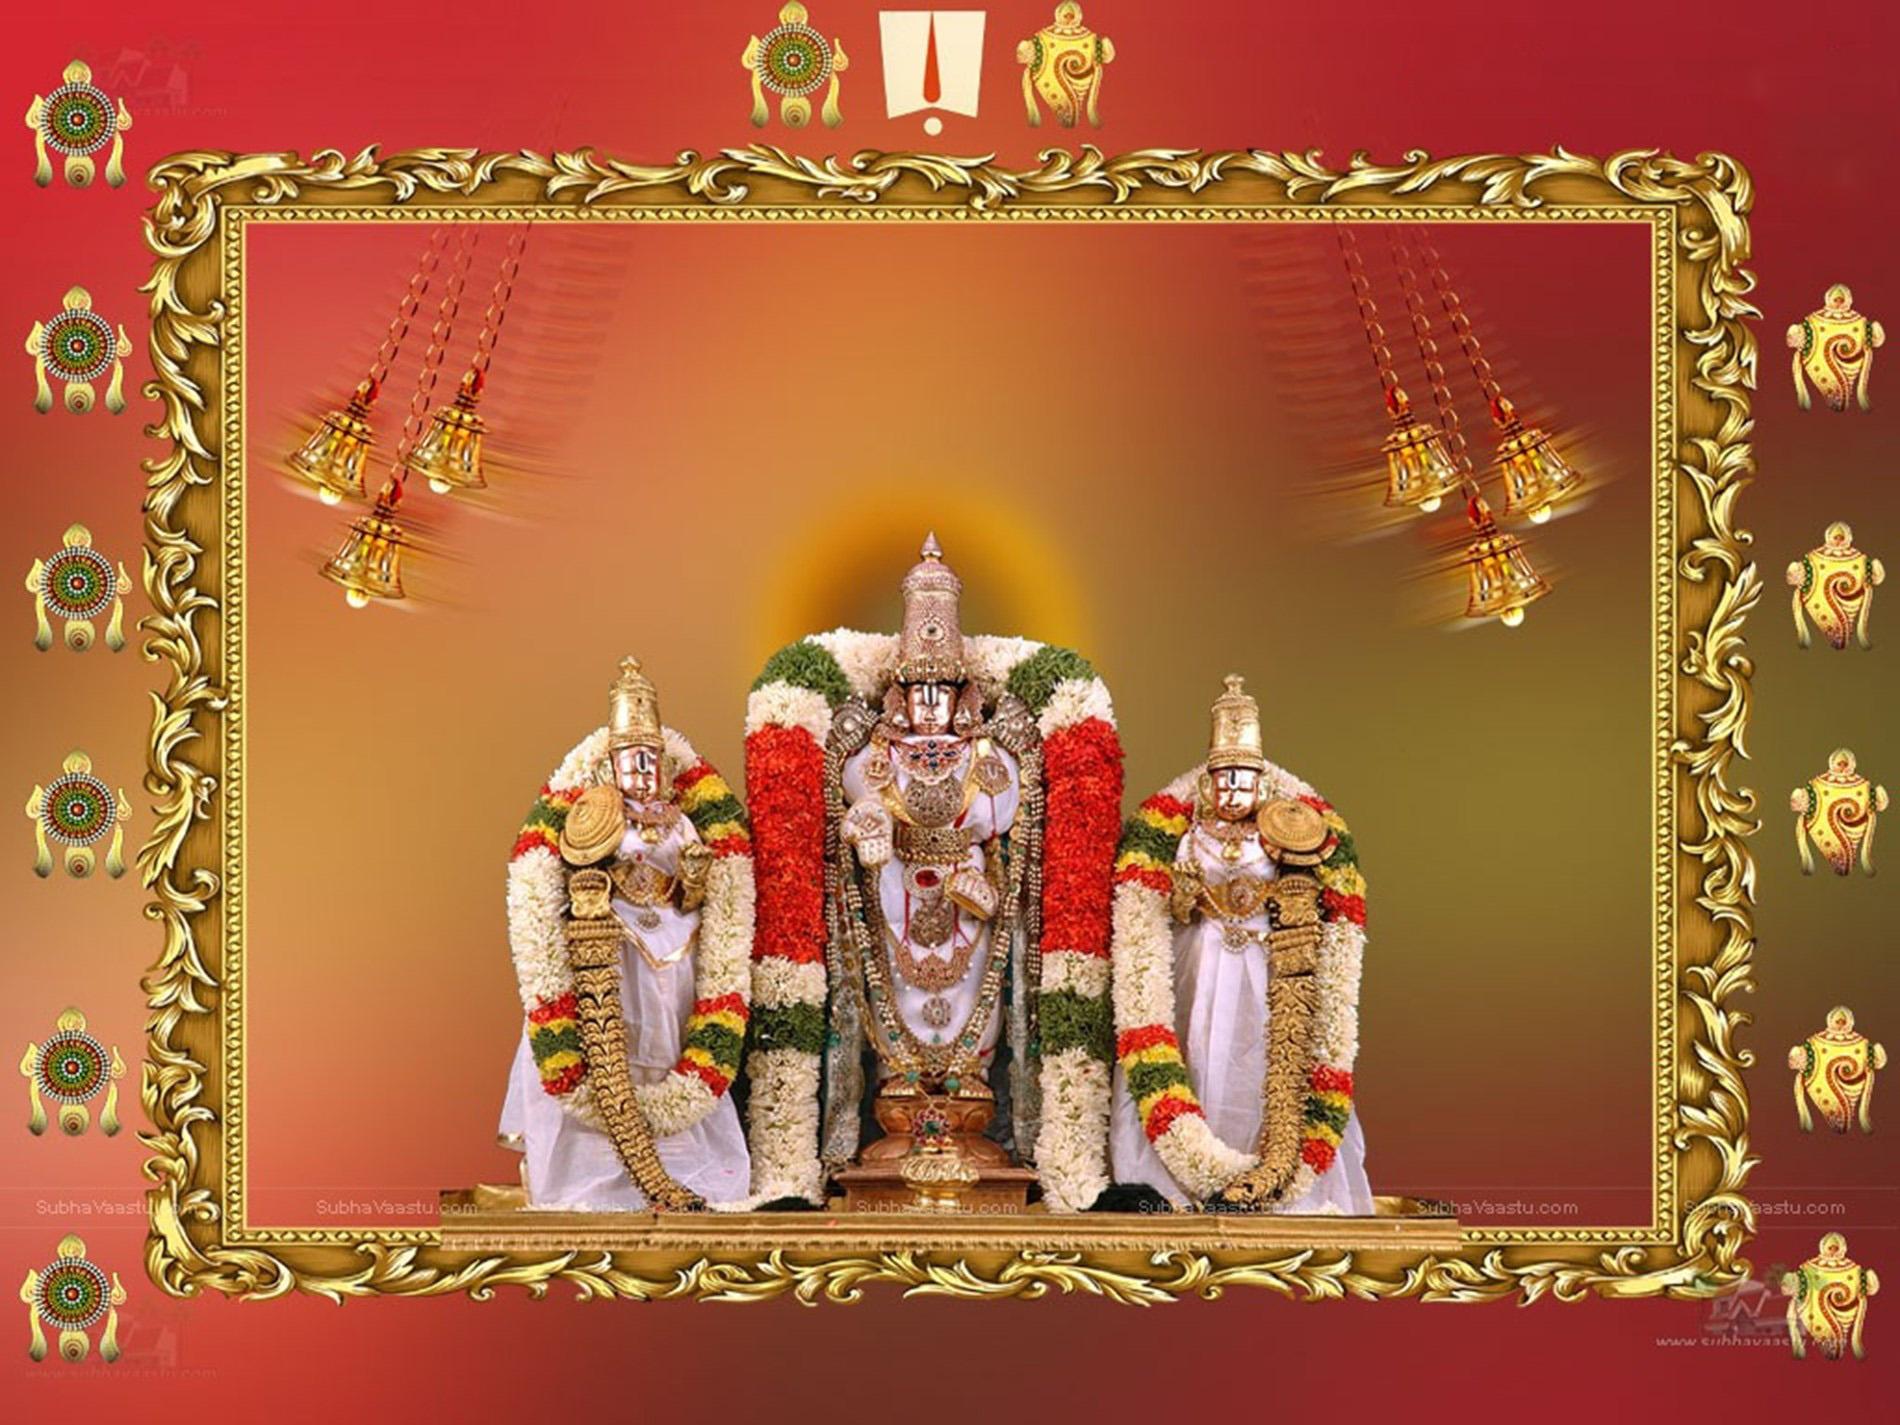 Tirumala Sri Venkateswara Image Wallpaper Hindu God